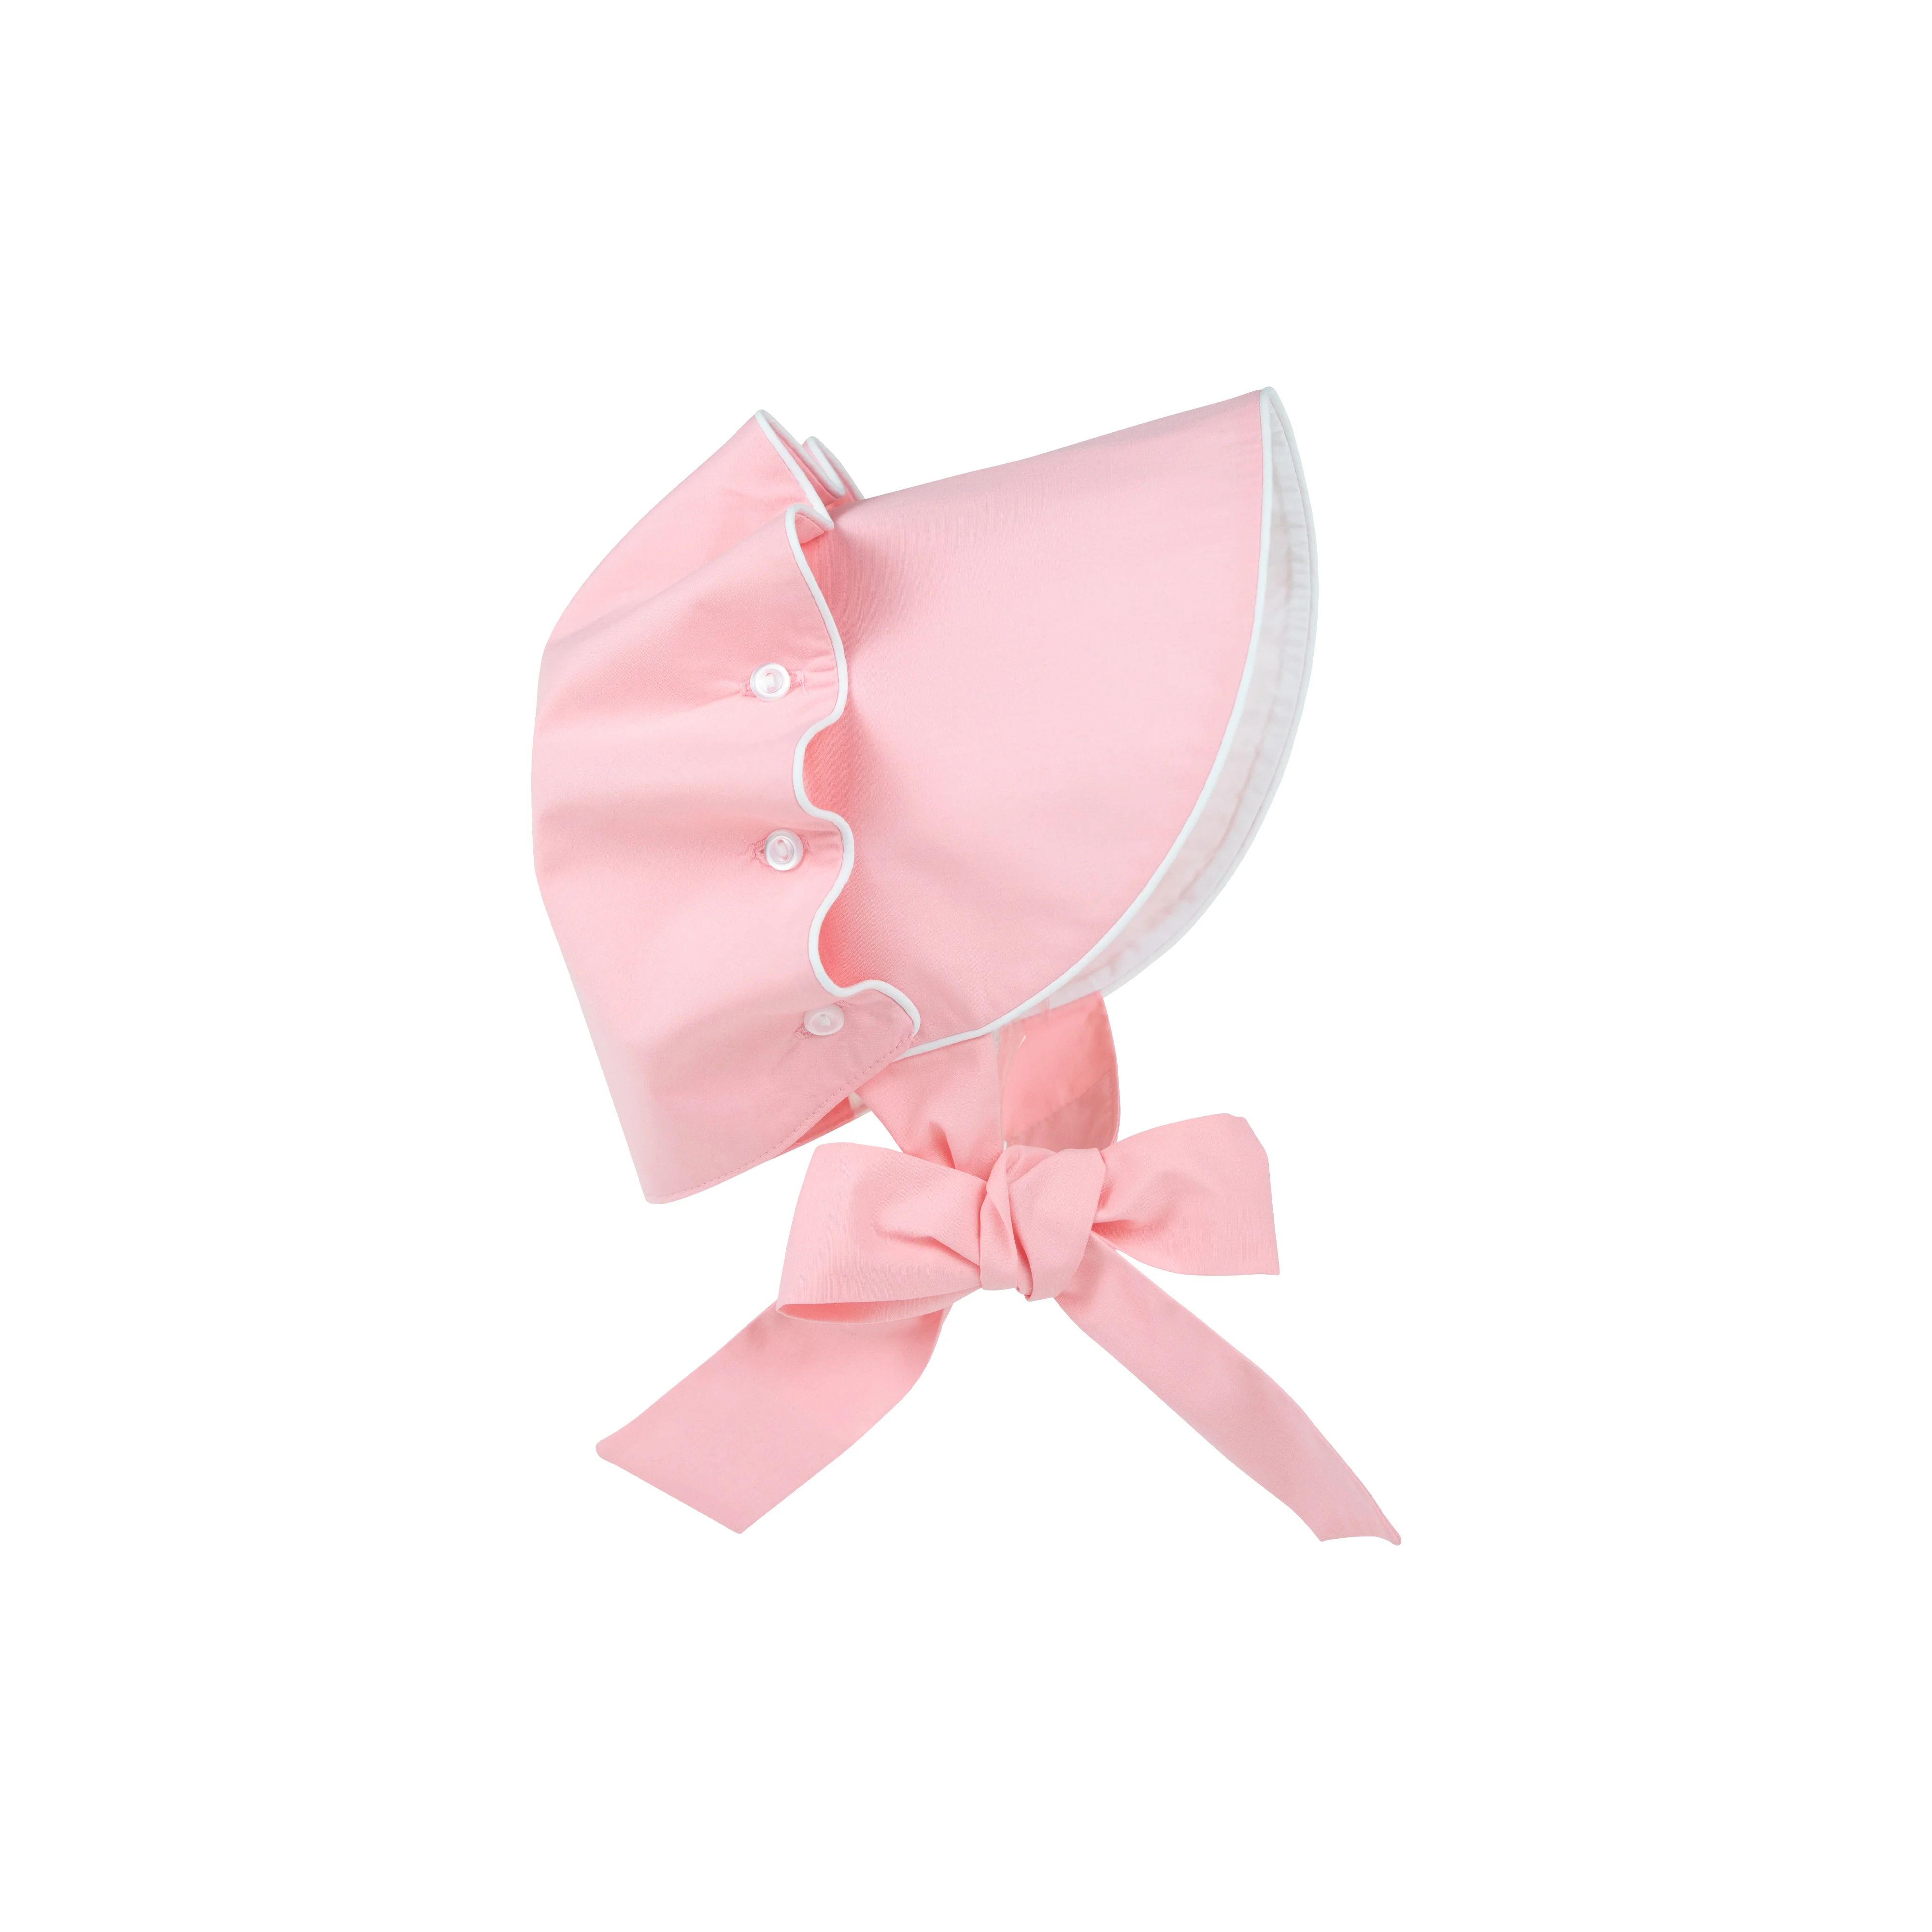 Beaufort Bonnet - Sandpearl Pink with Worth Avenue White | The Beaufort Bonnet Company